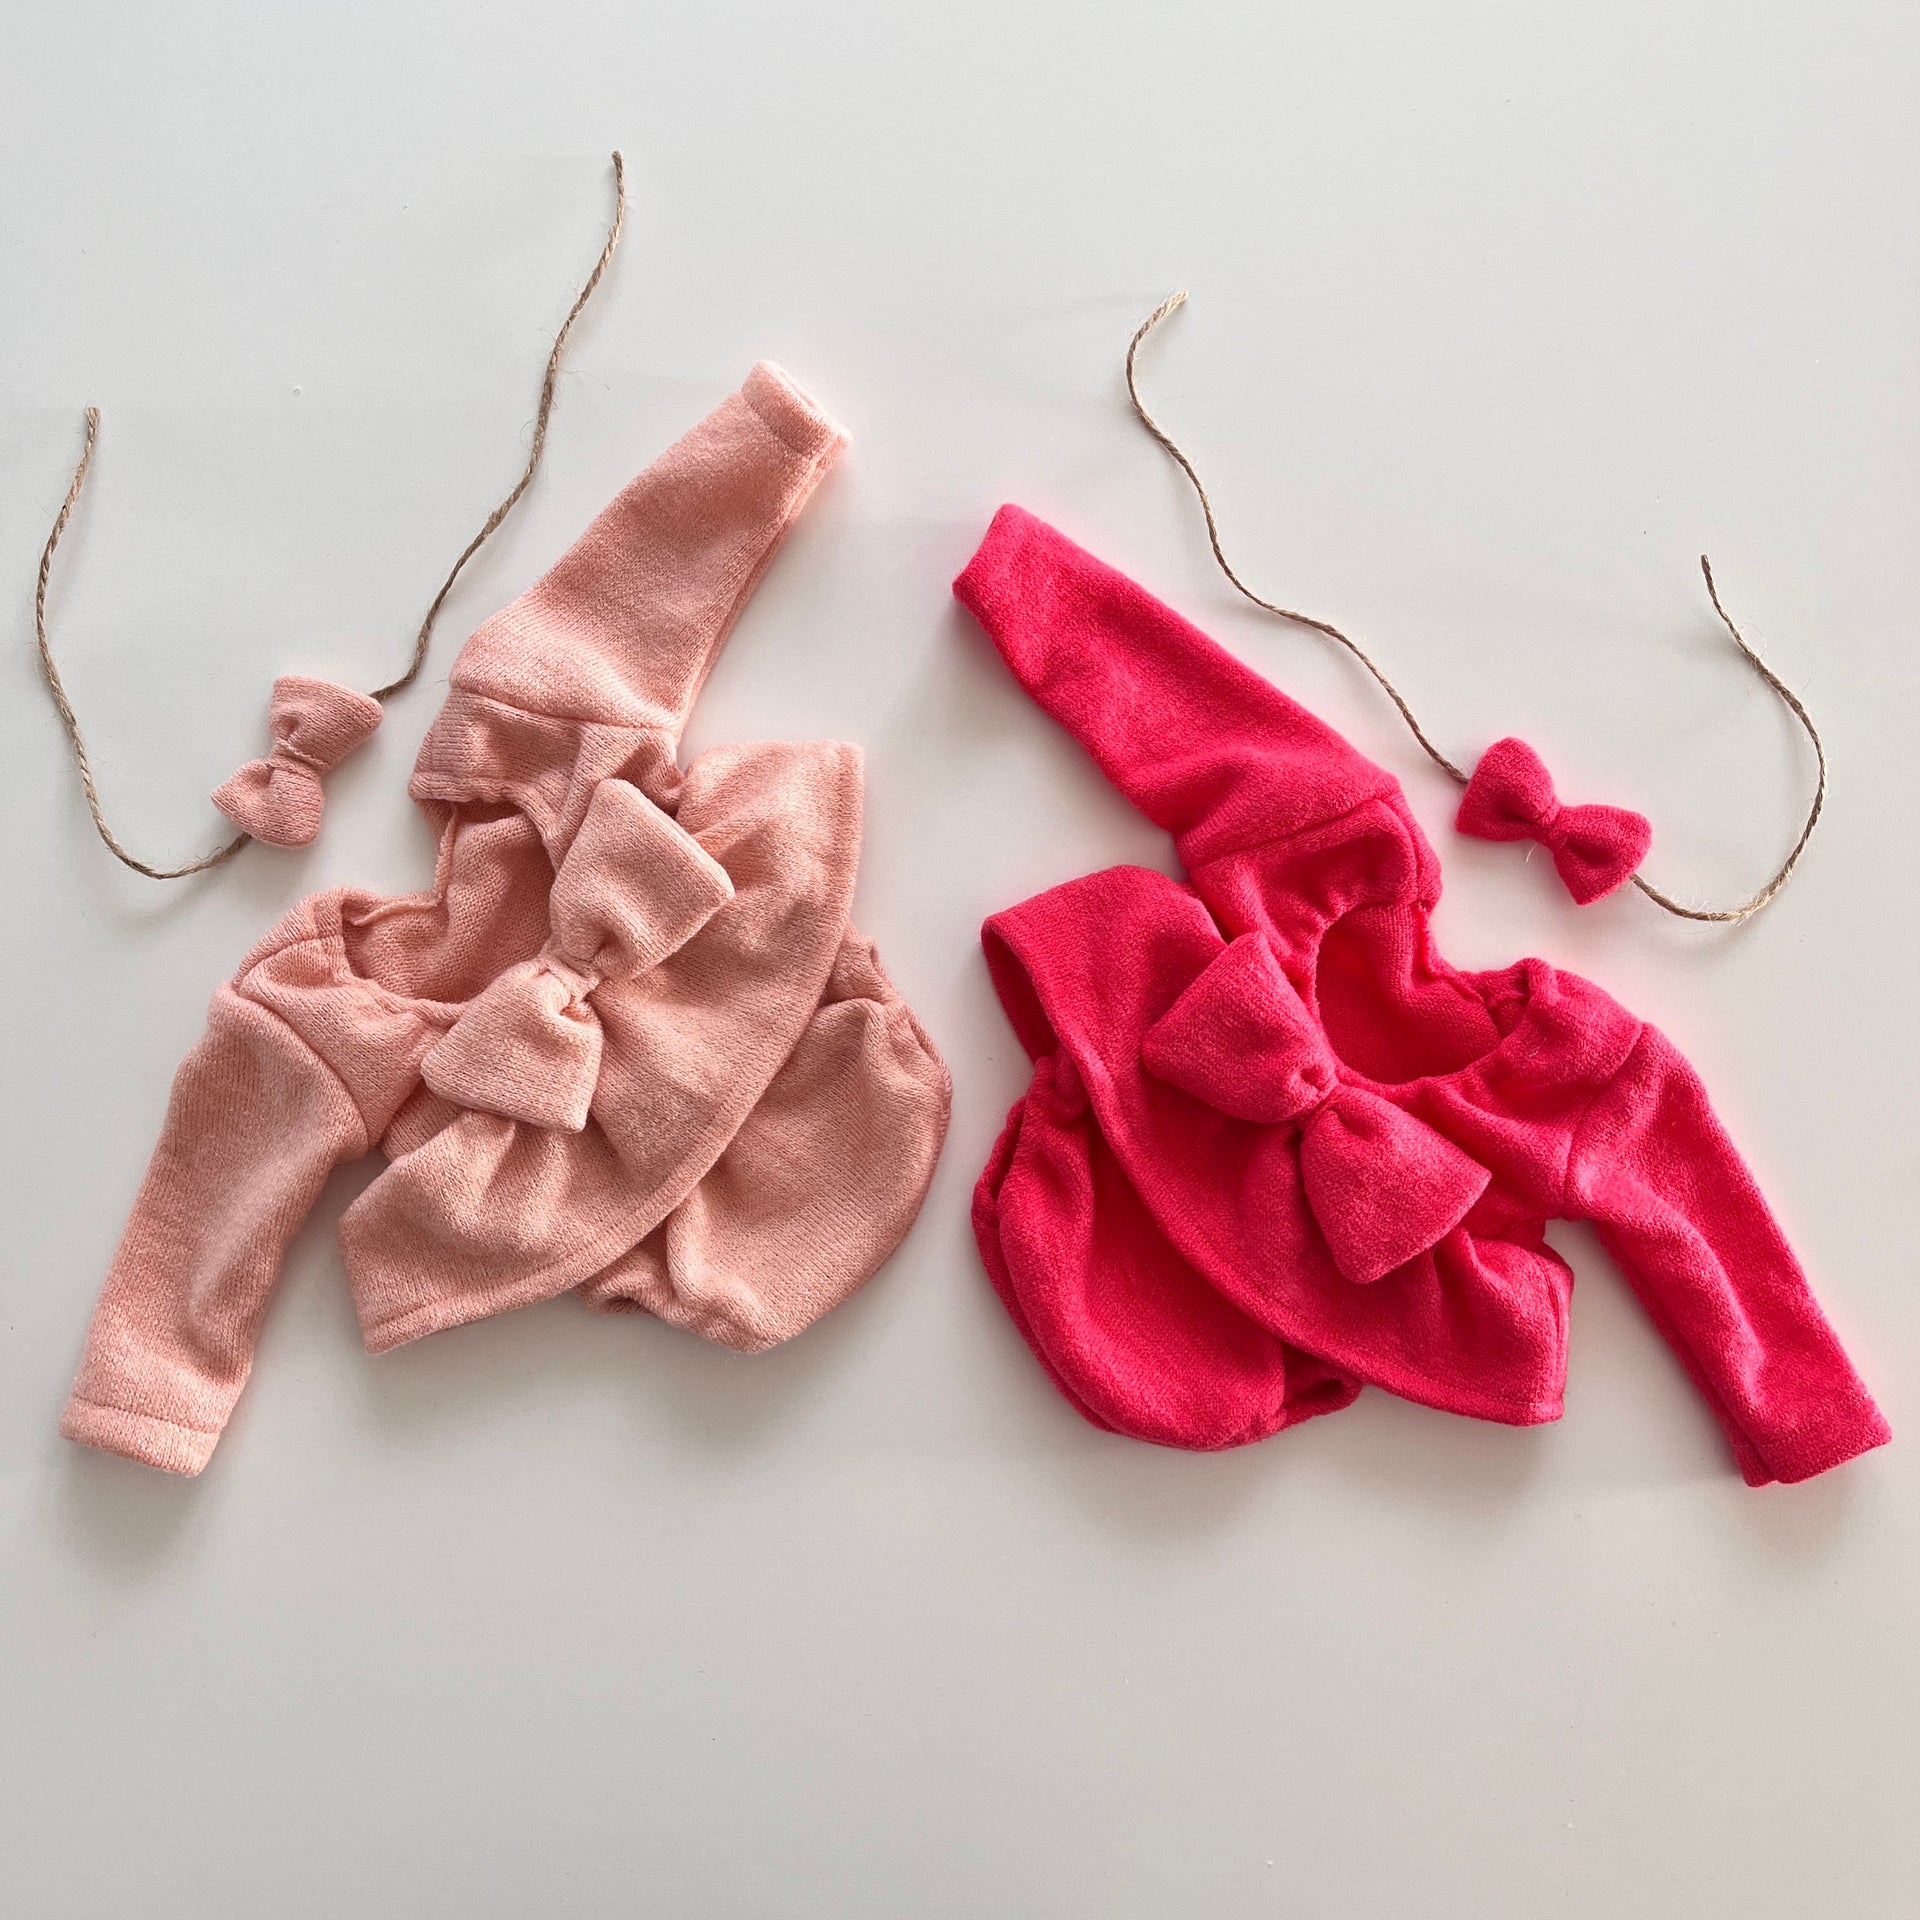 Baby Pink Ribbon - Shop on Pinterest